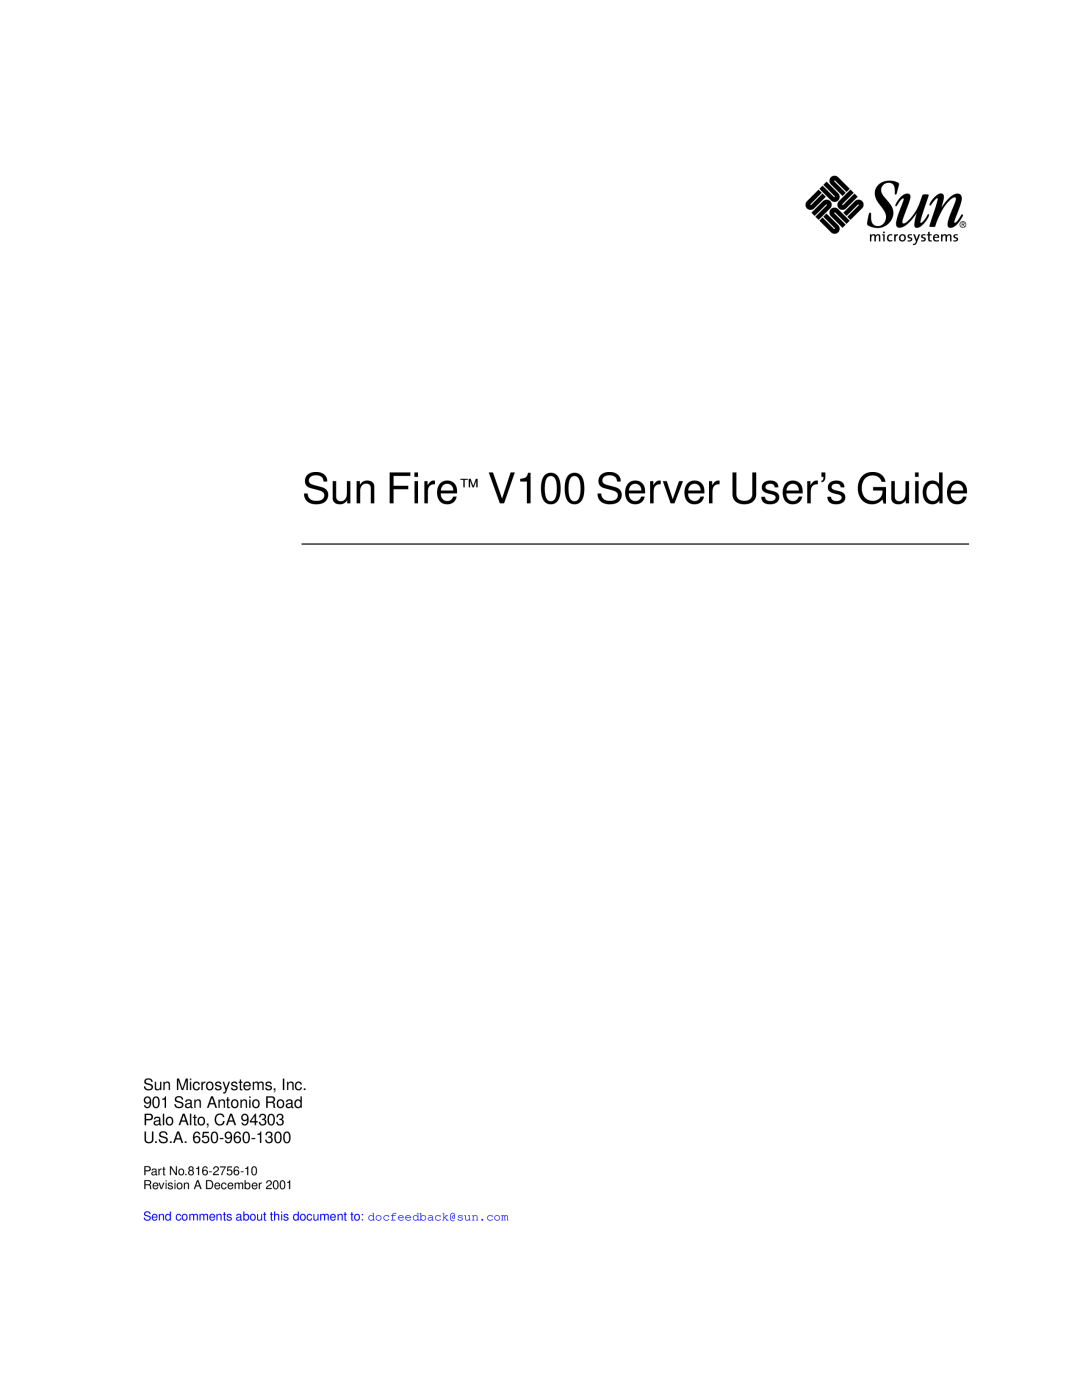 Sun Microsystems manual Sun Fire V100 Server User’s Guide, Part No.816-2756-10 Revision A December 